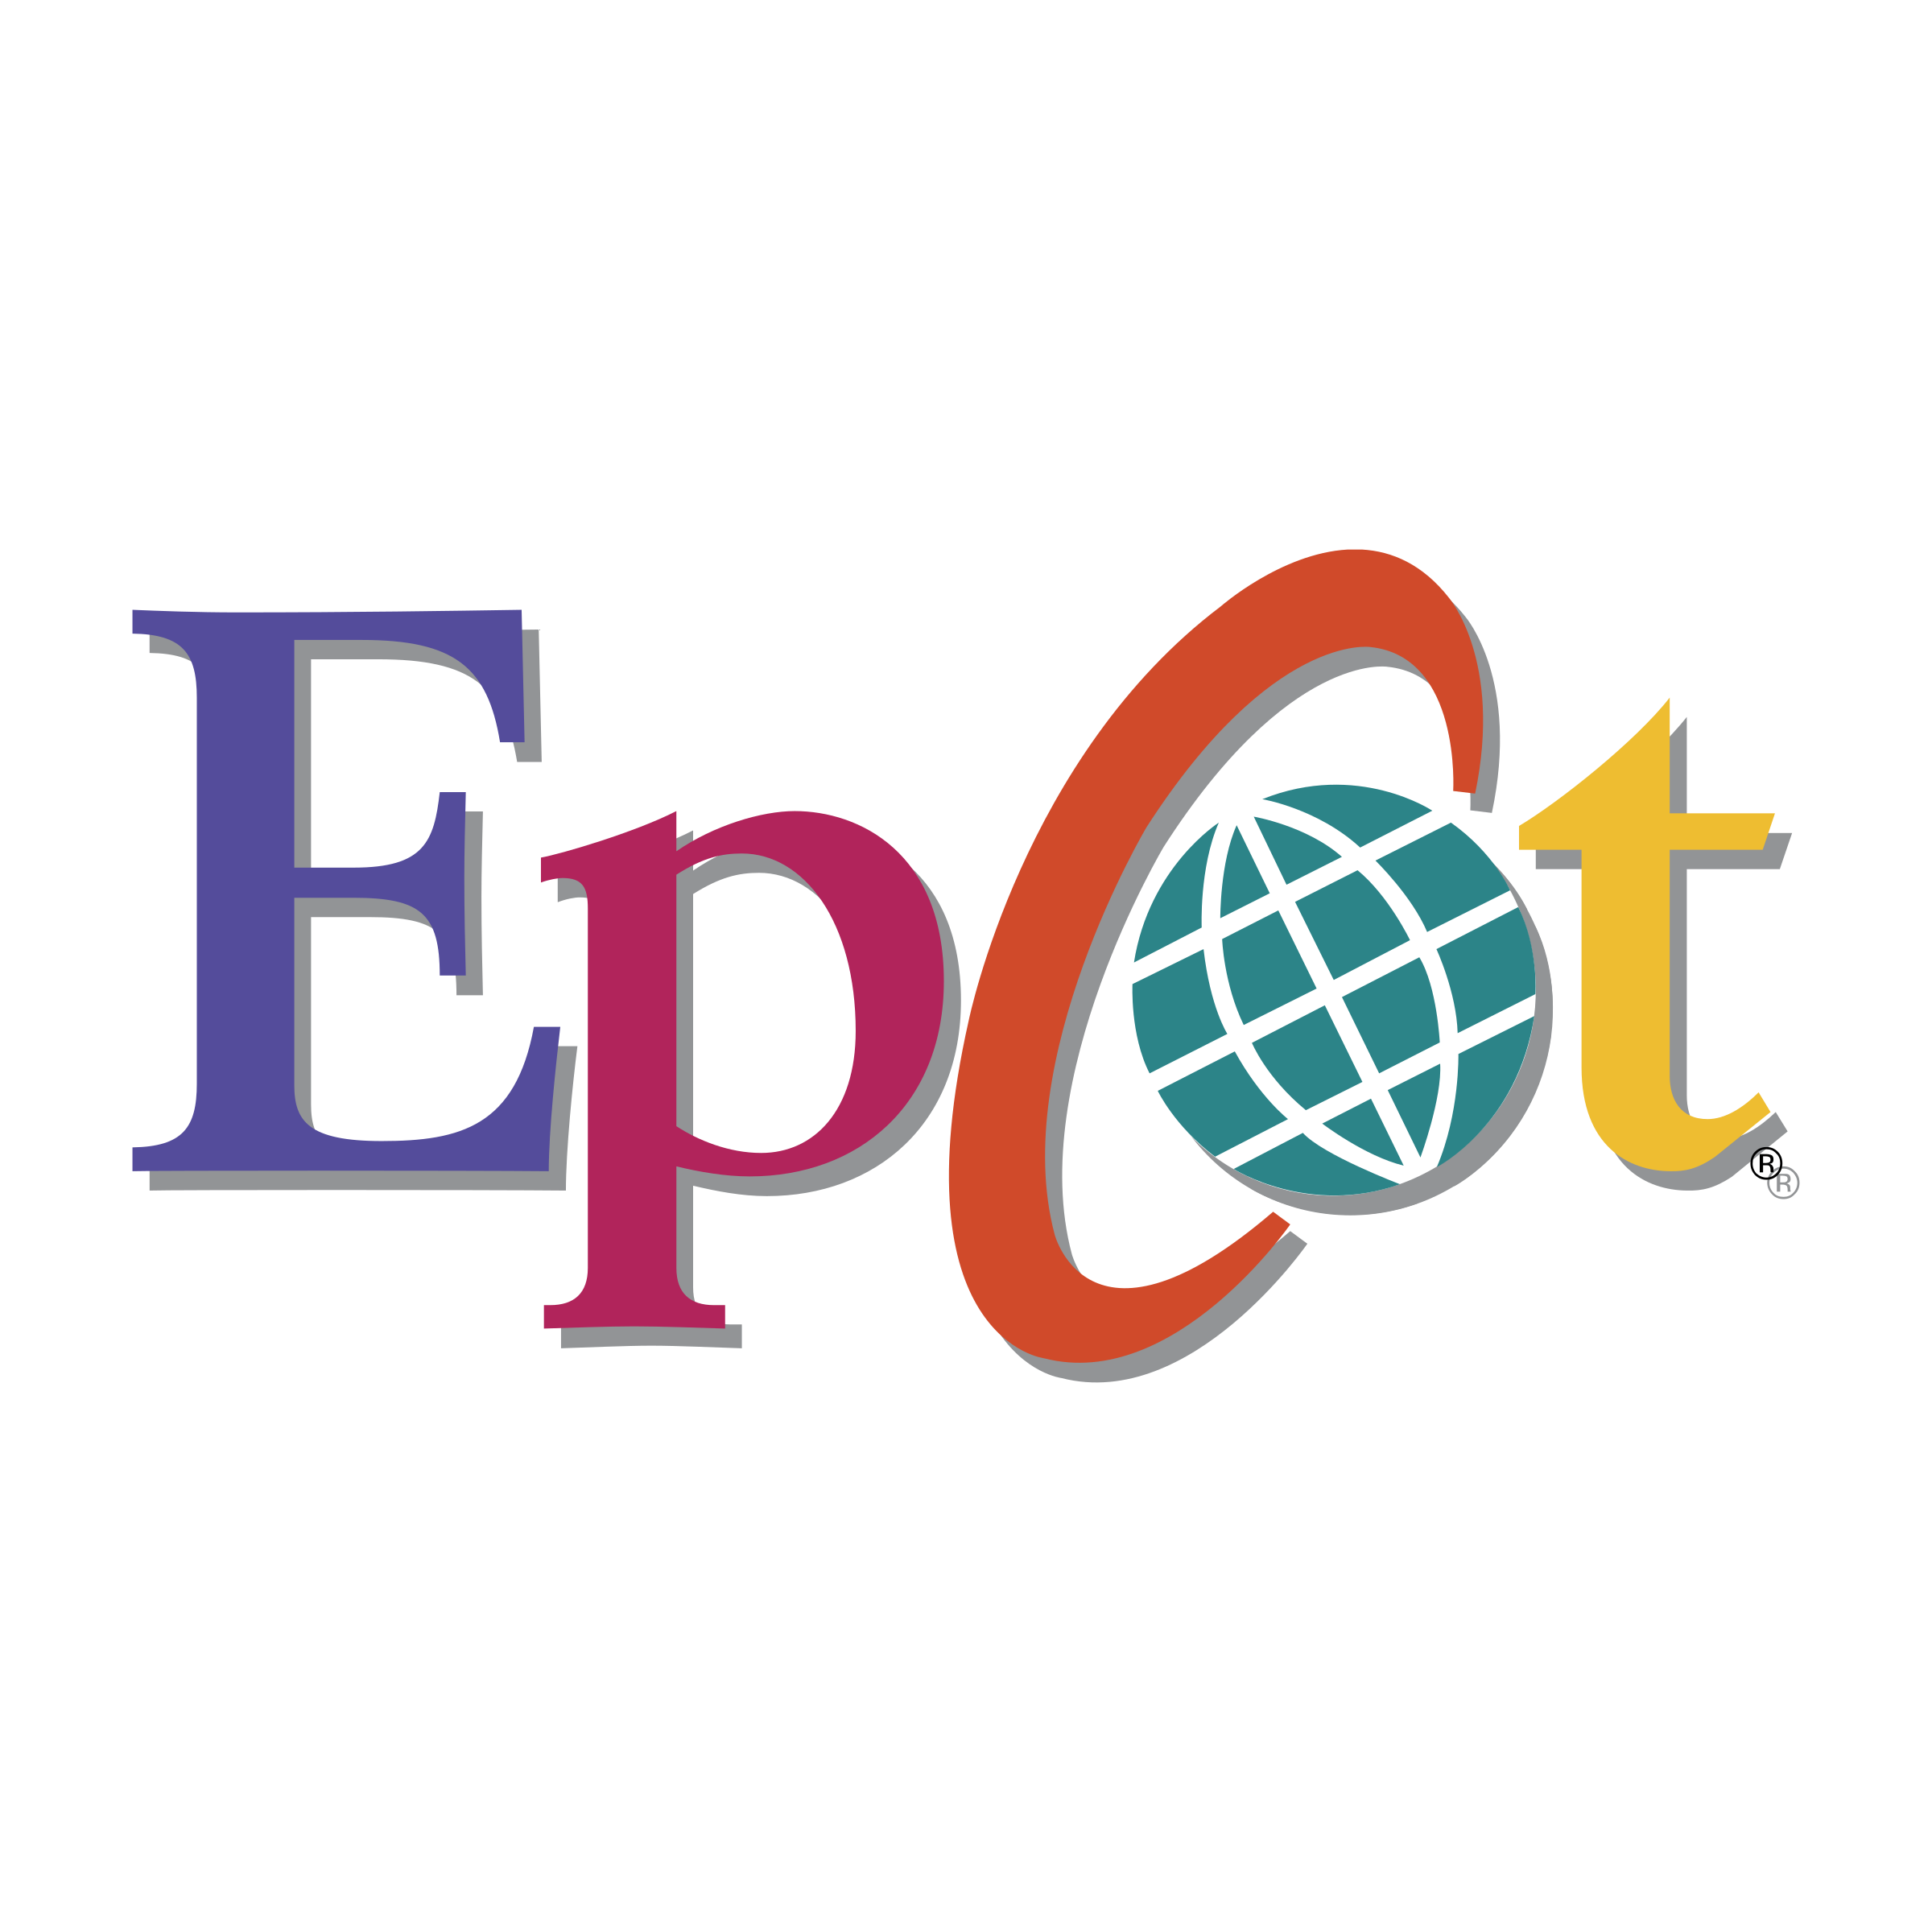 epcot-logo-png-transparent.png